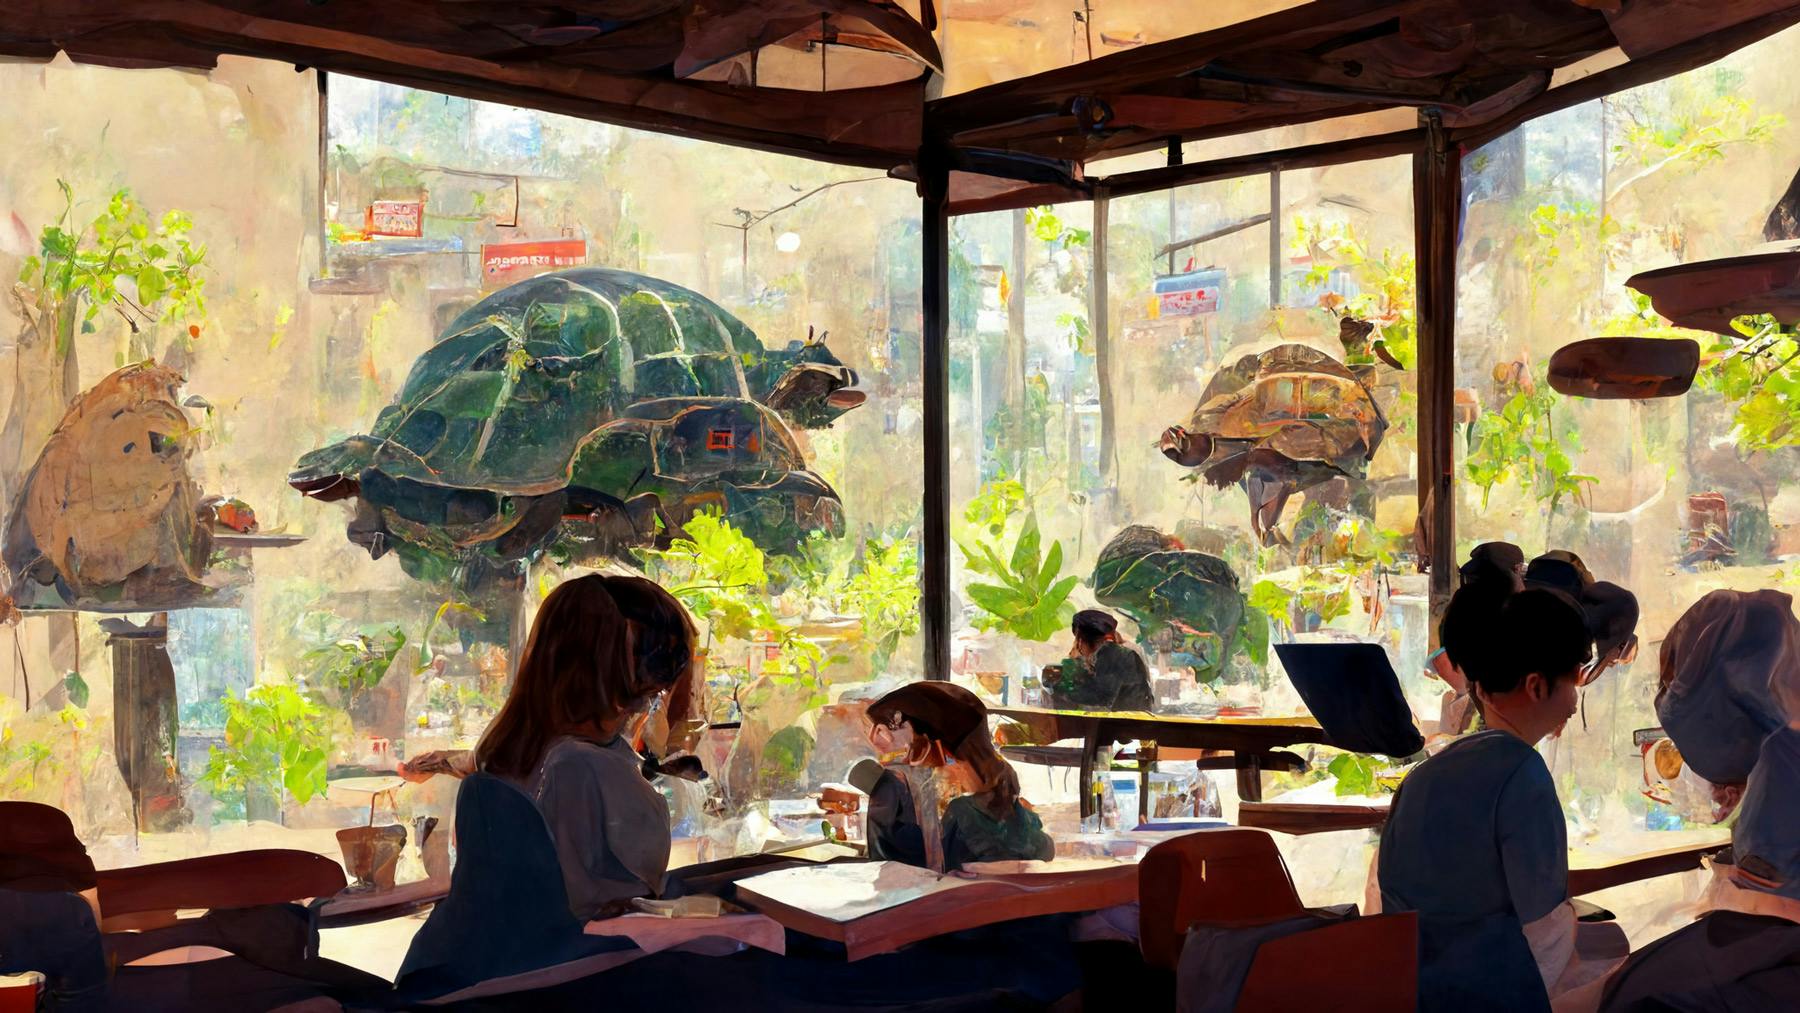 AI of a turtle cafe in LA